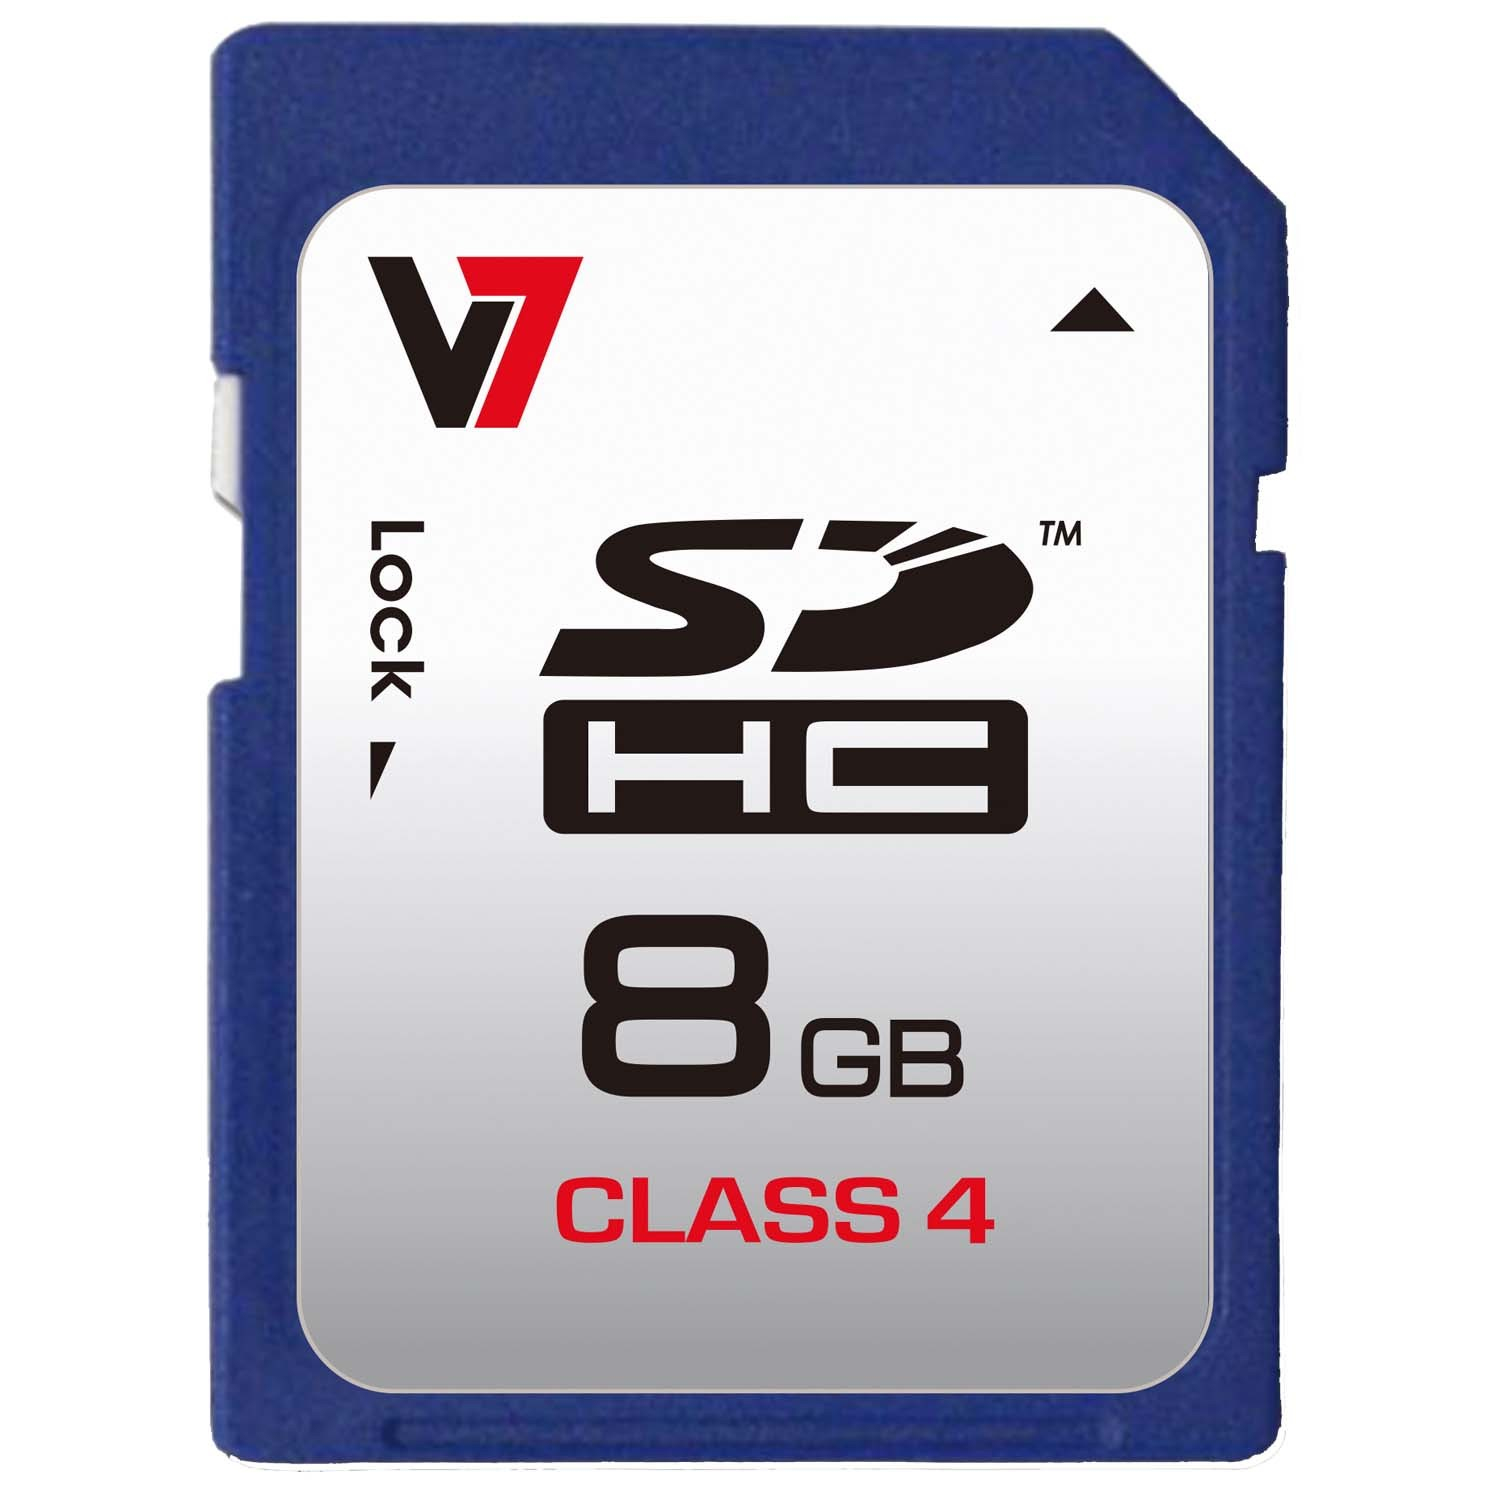 Axpro                            V7 Sd Card 8gb Sdhc Cl4             Retail                           In Vasdh8gcl4r-2e